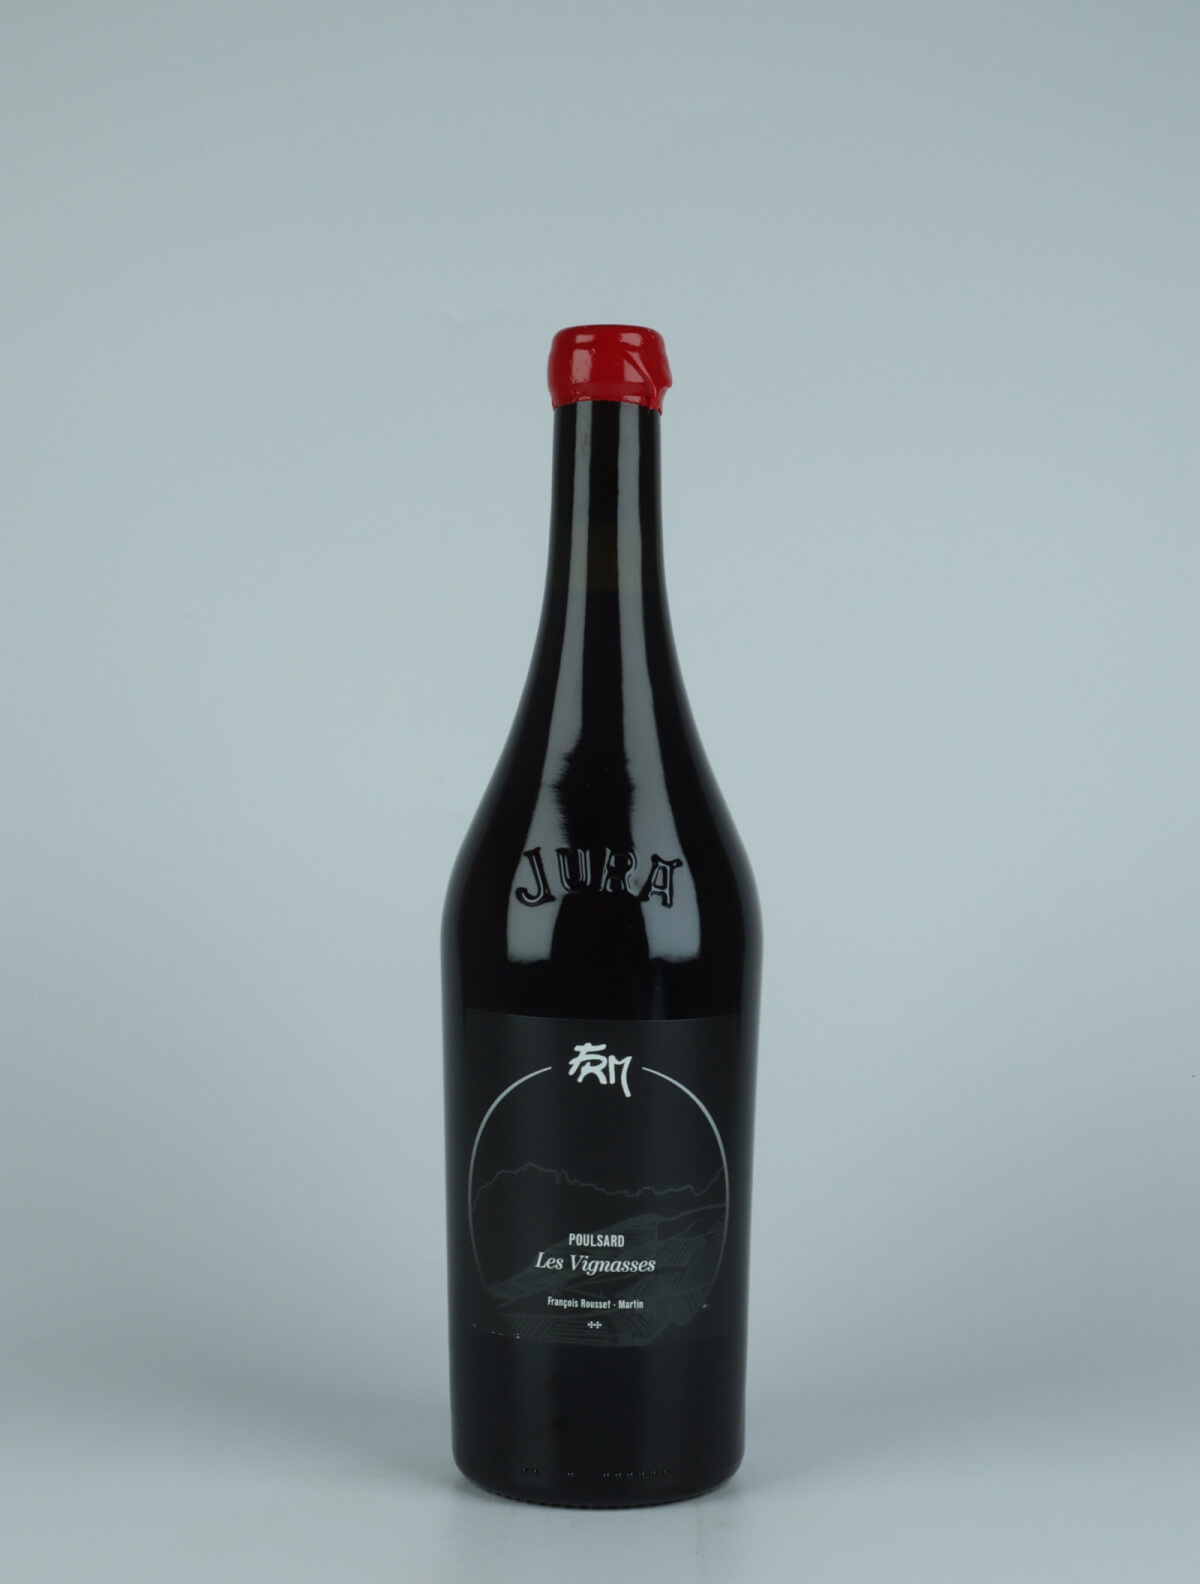 A bottle 2019 Les Vignasses - Poulsard Red wine from François Rousset-Martin, Jura in France